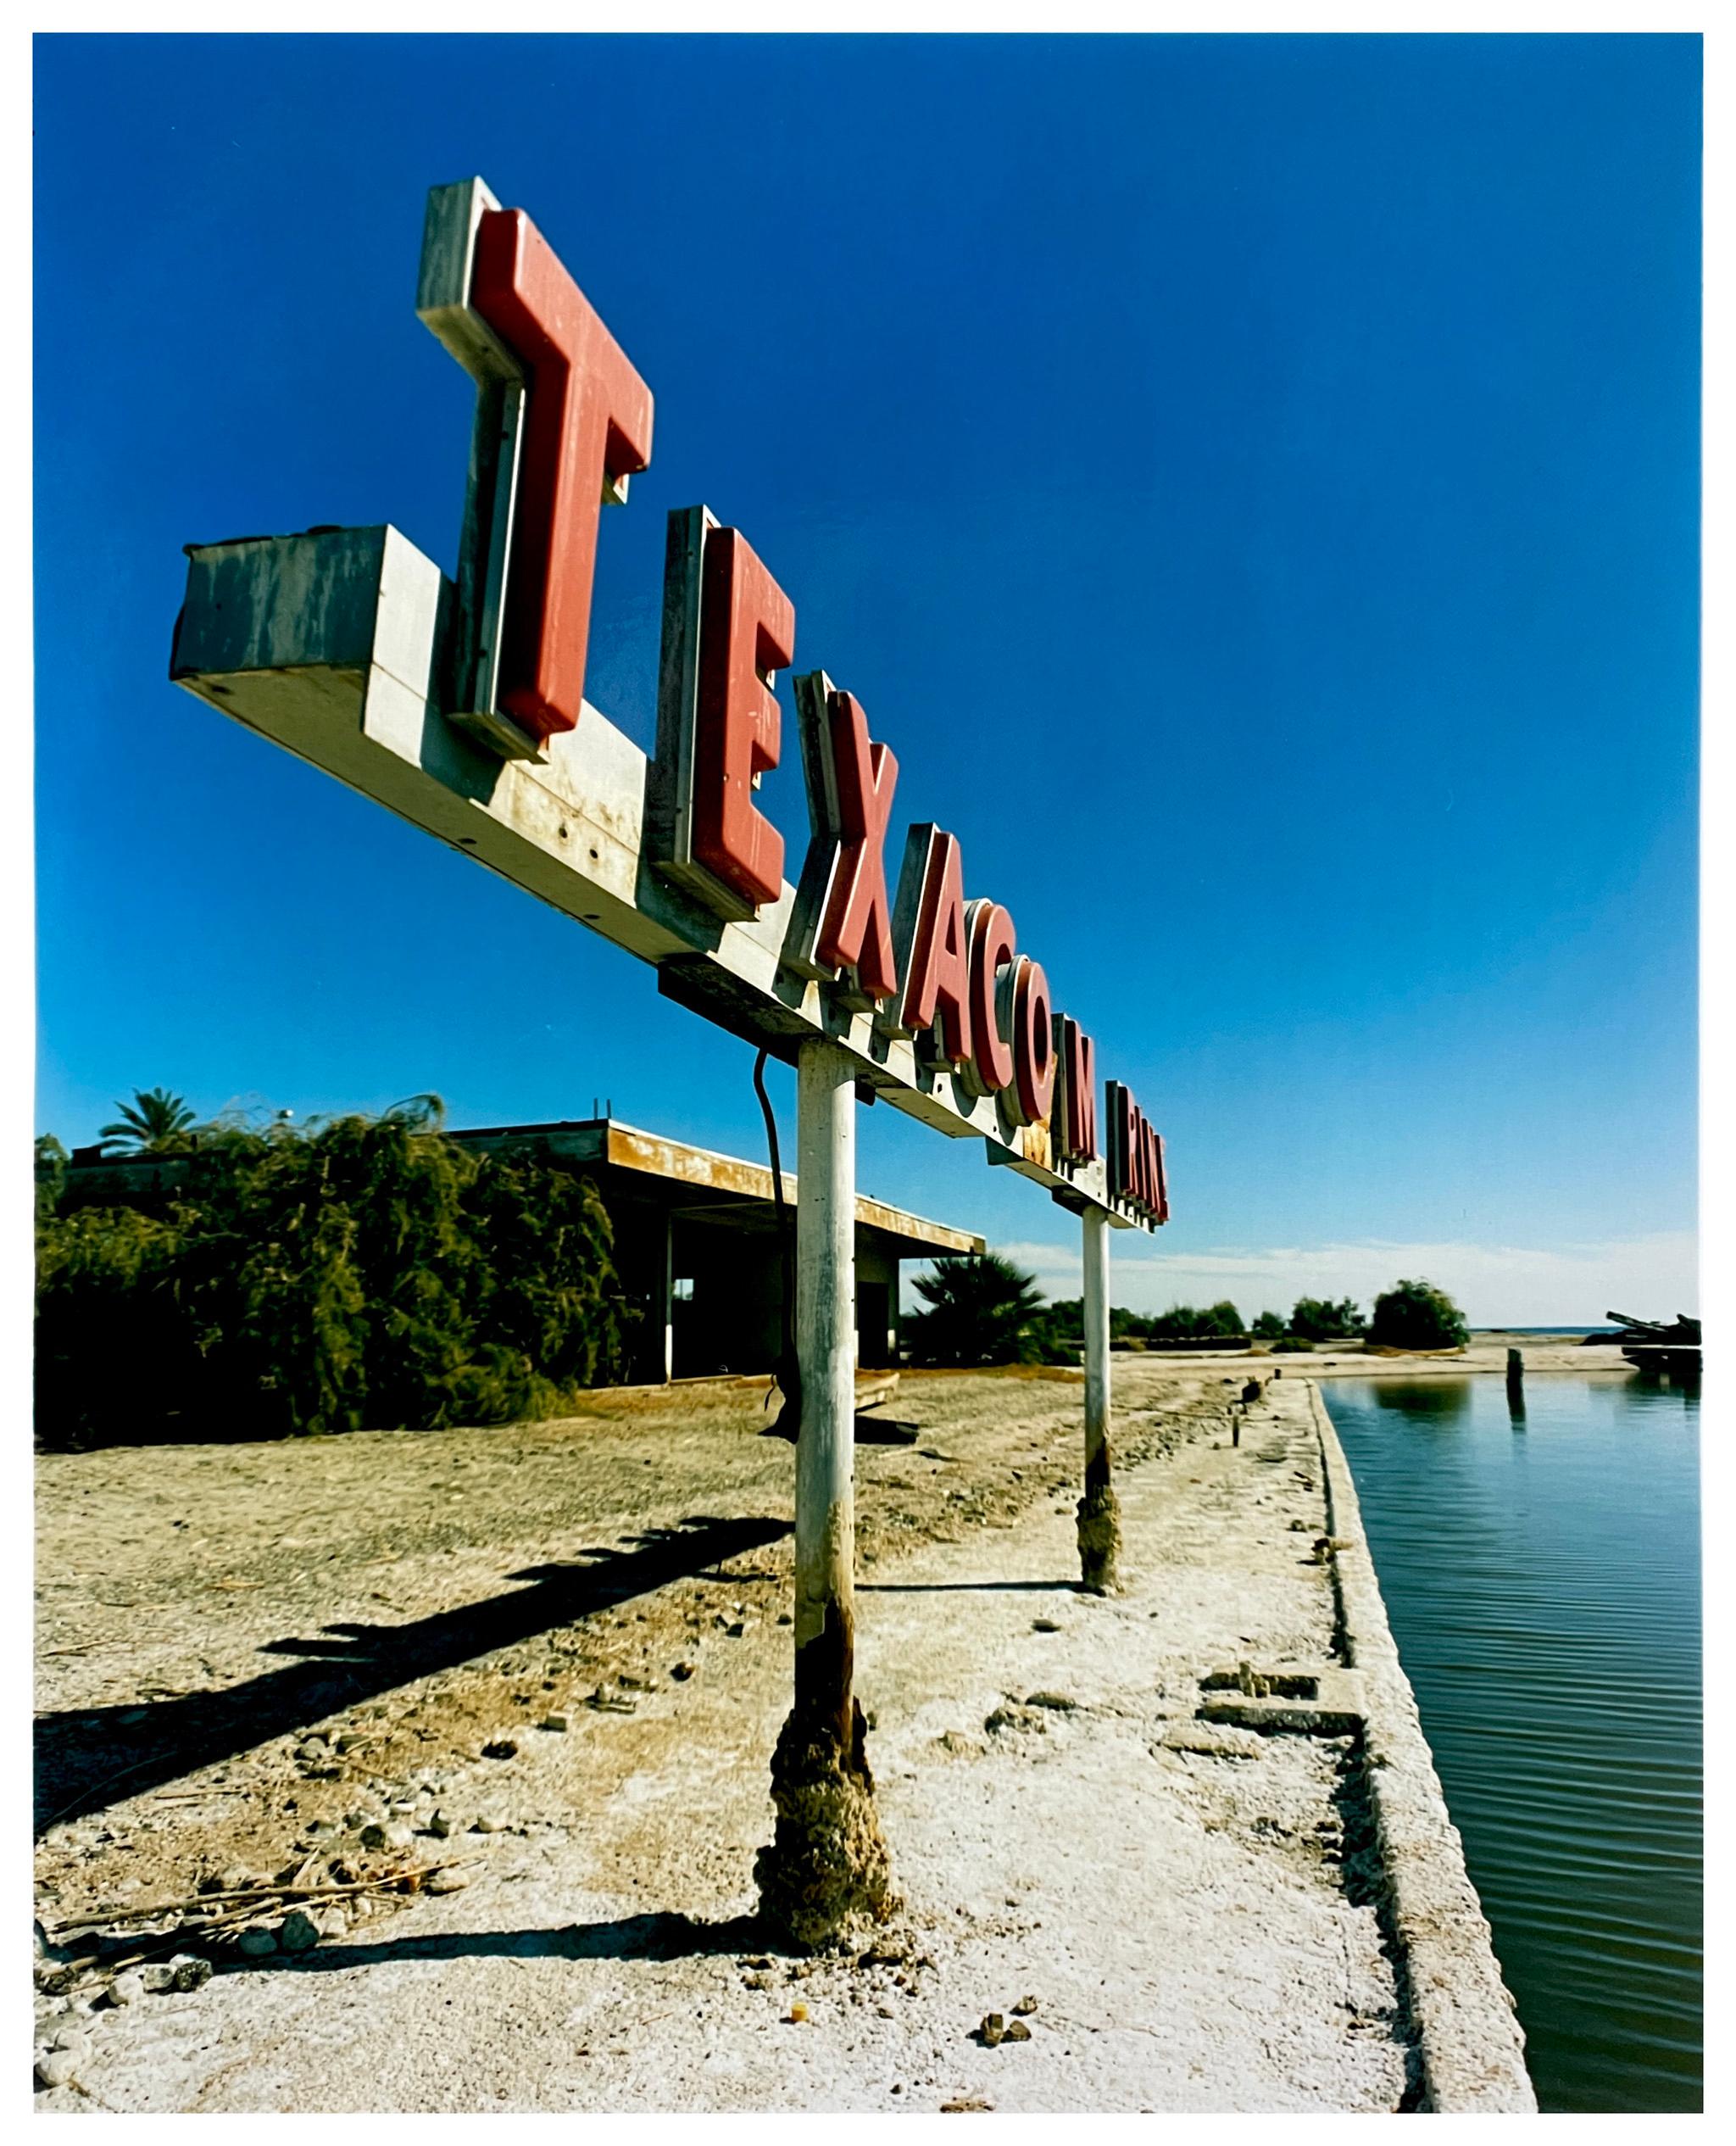 Richard Heeps Landscape Photograph - Texaco Marine Sign & Marina, Salton Sea, California - sign color photography